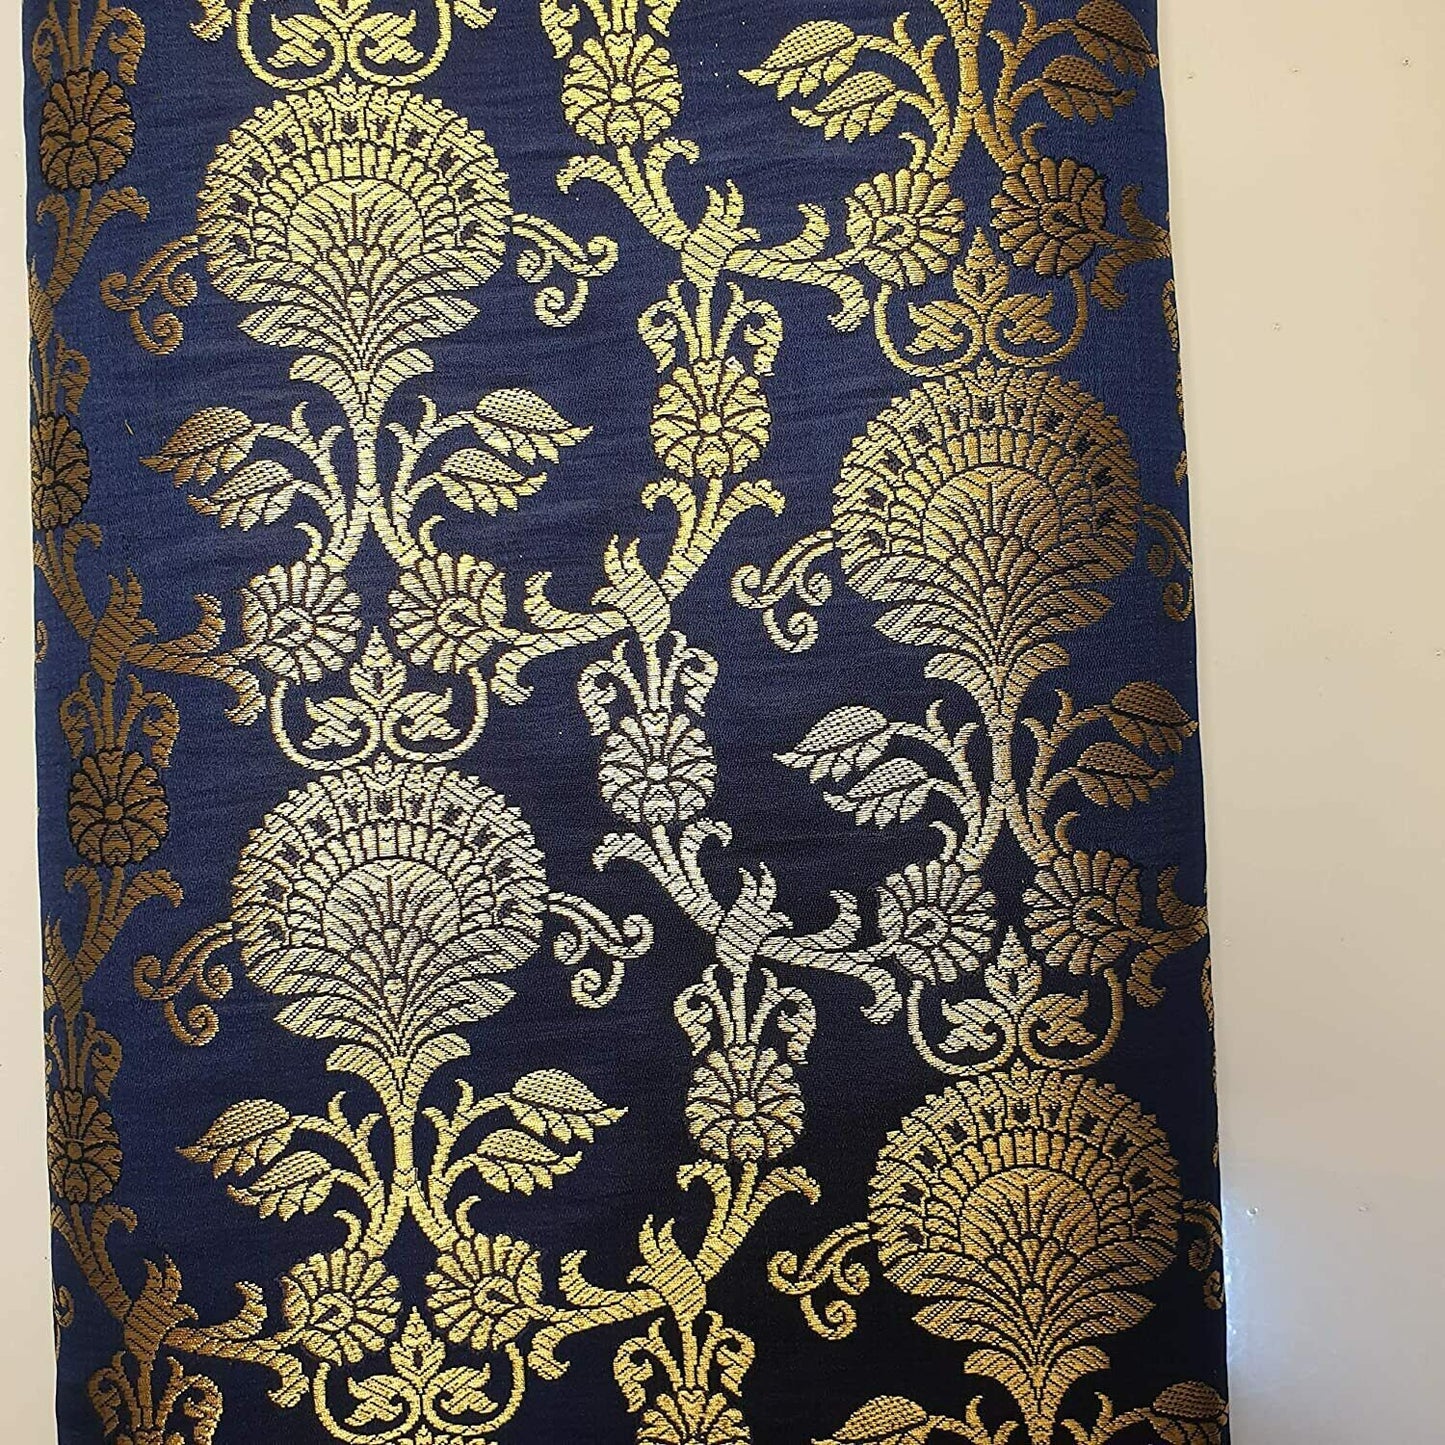 New Prints Ornamental Floral Gold Metallic Print Indian Banarasi Brocade Fabric (Navy Blue)